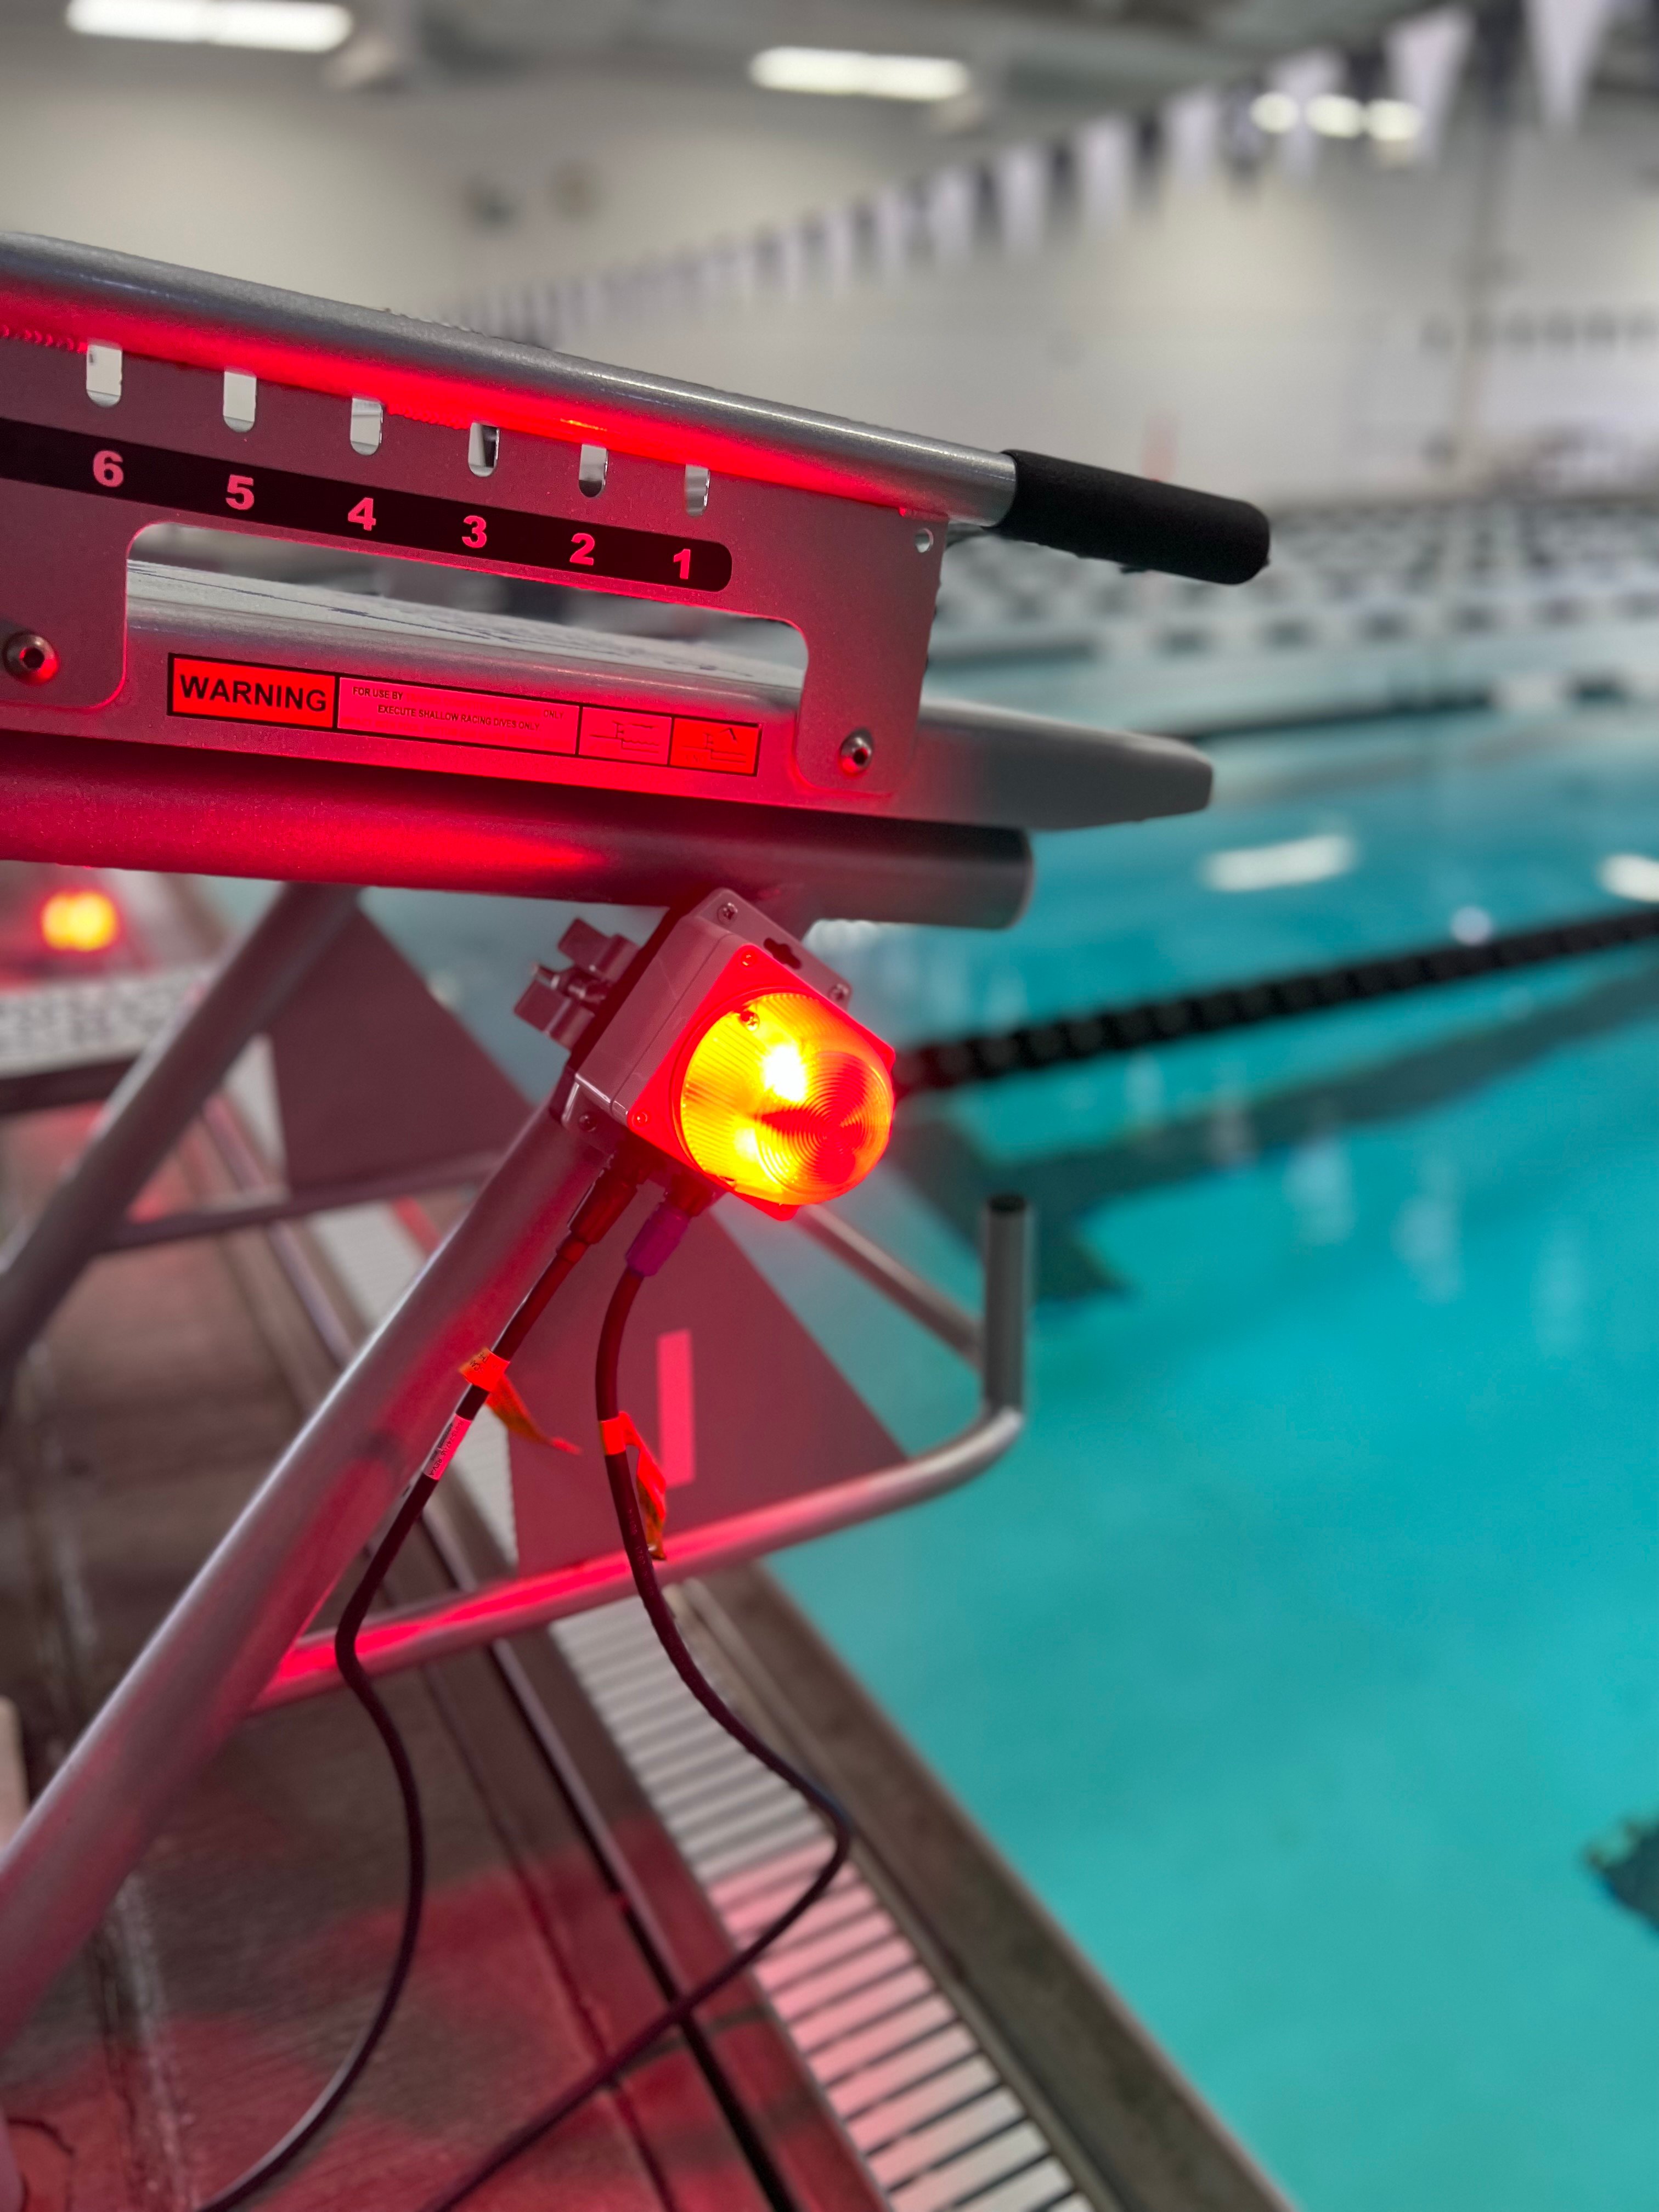 Championship Elite Swimming Start System External visual indicator (EVI) on starting block lit up red